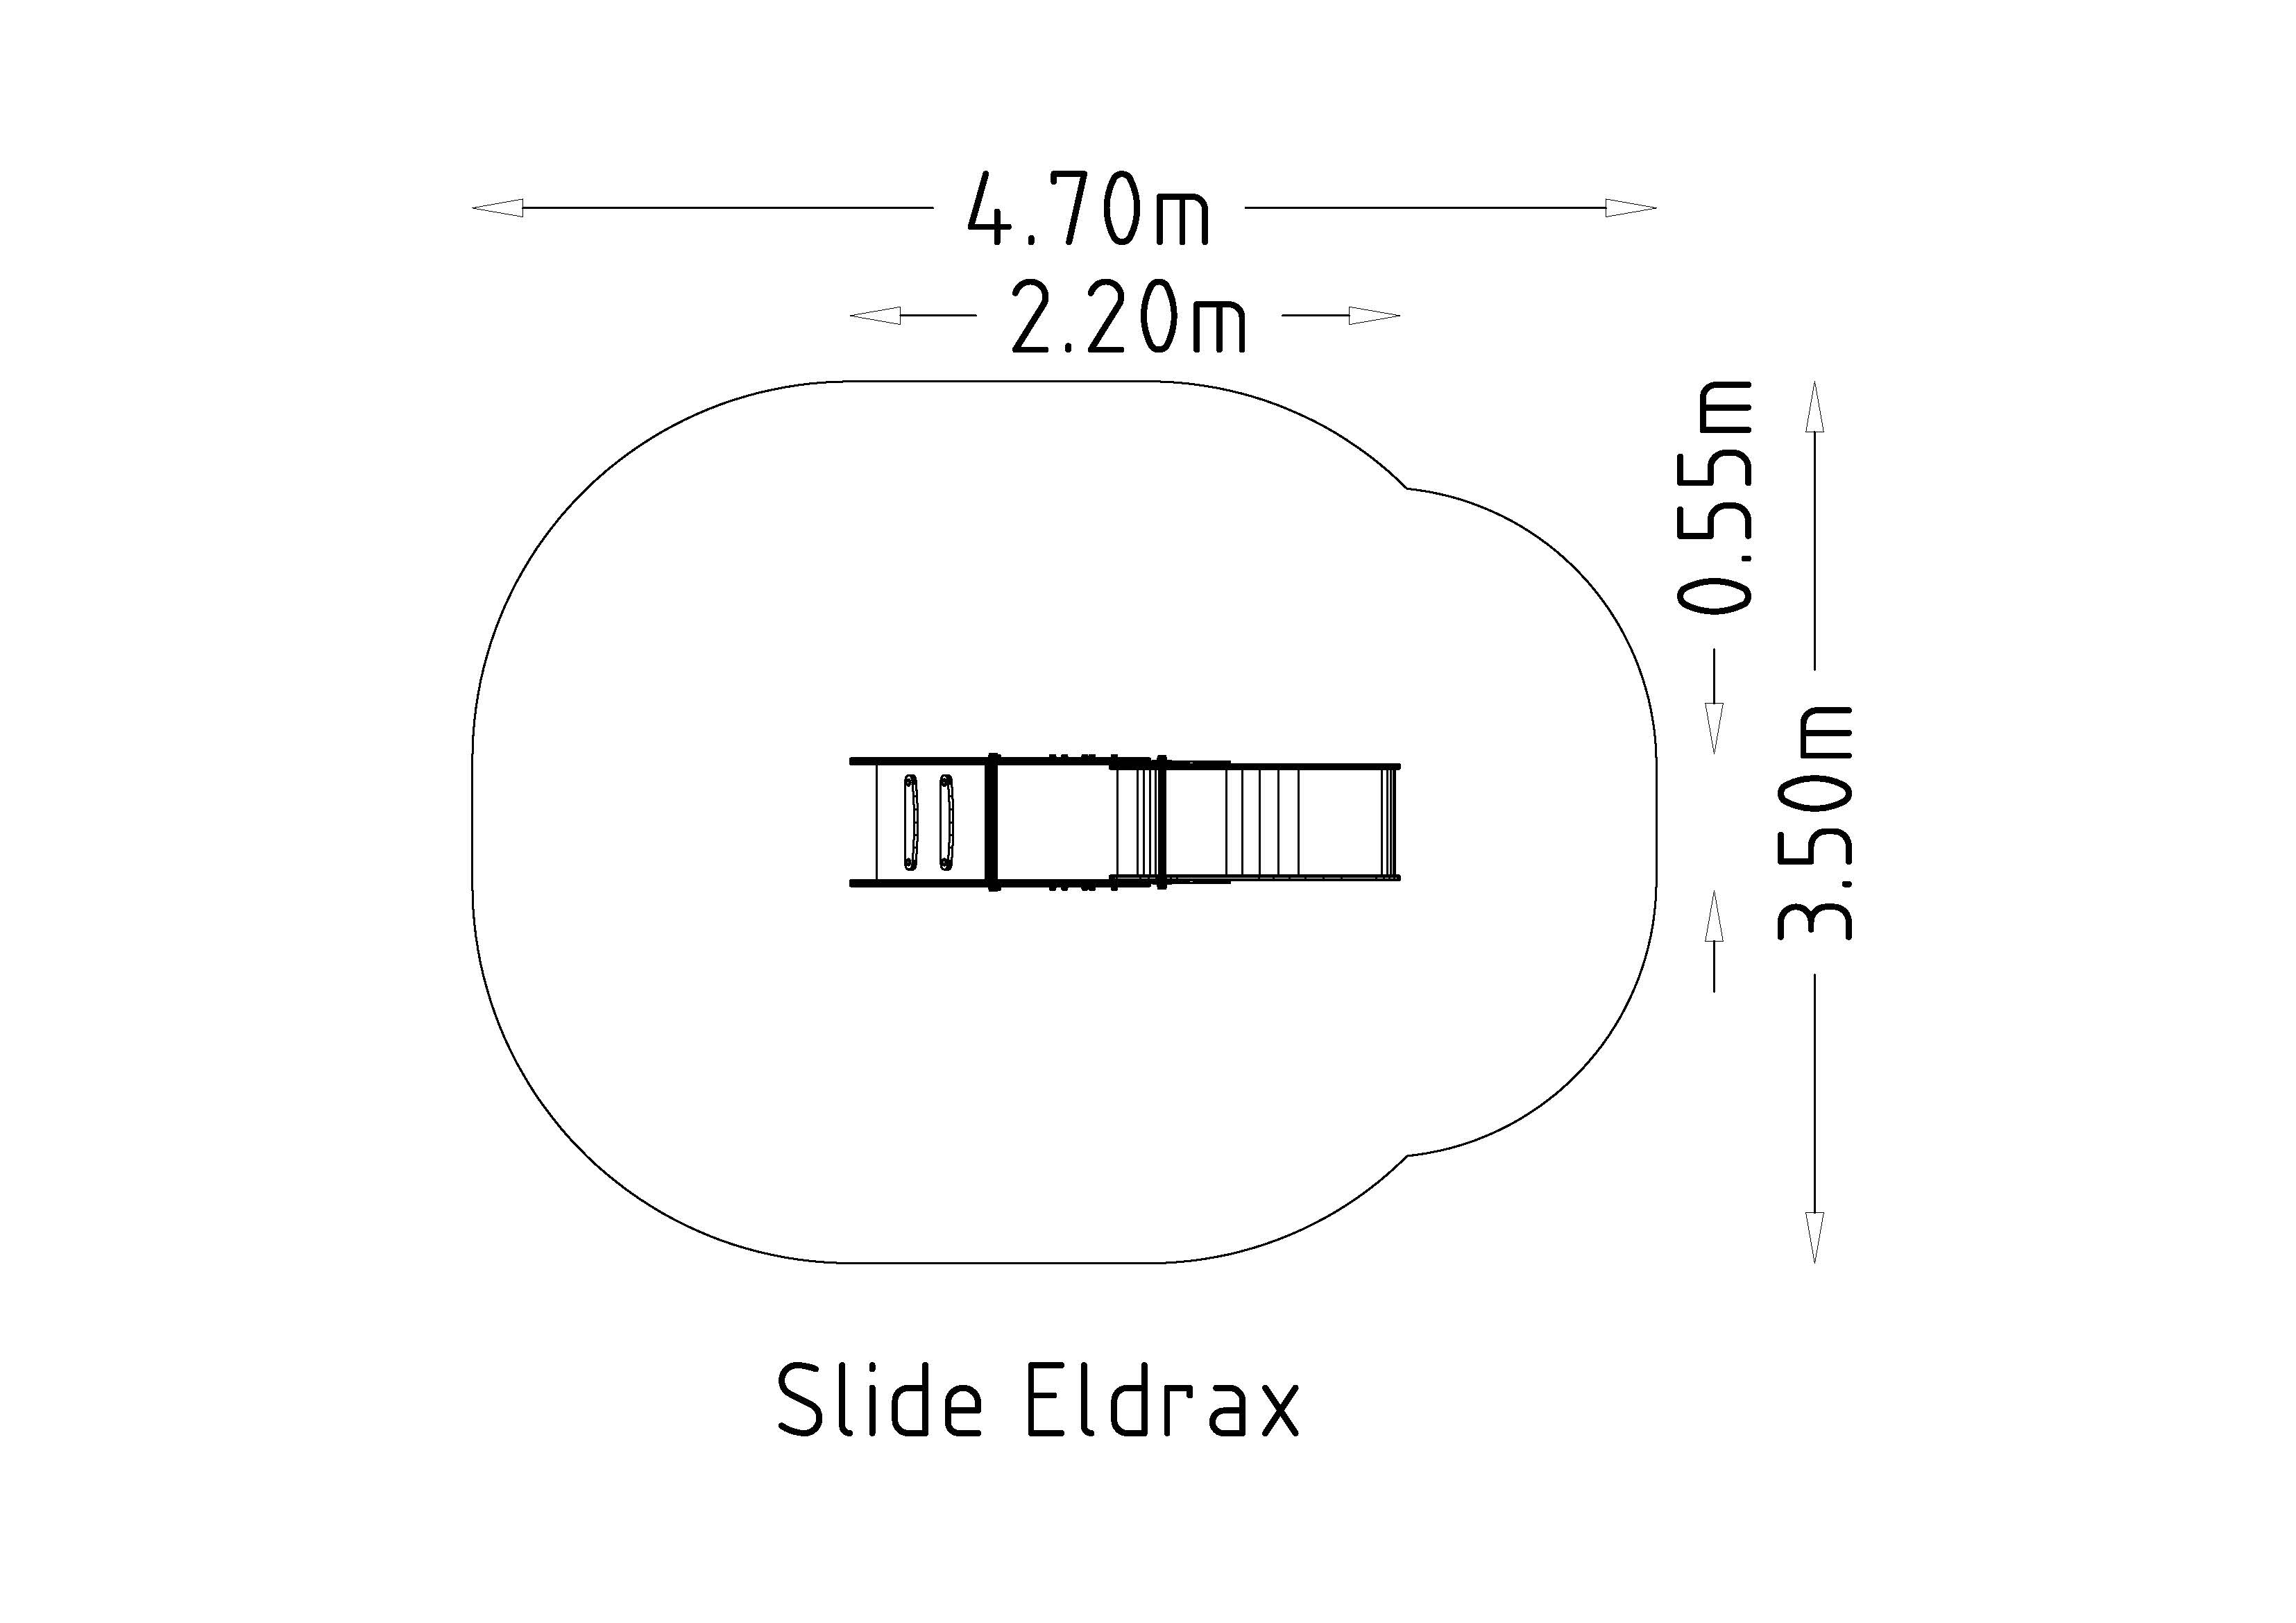 Slide Eldrax